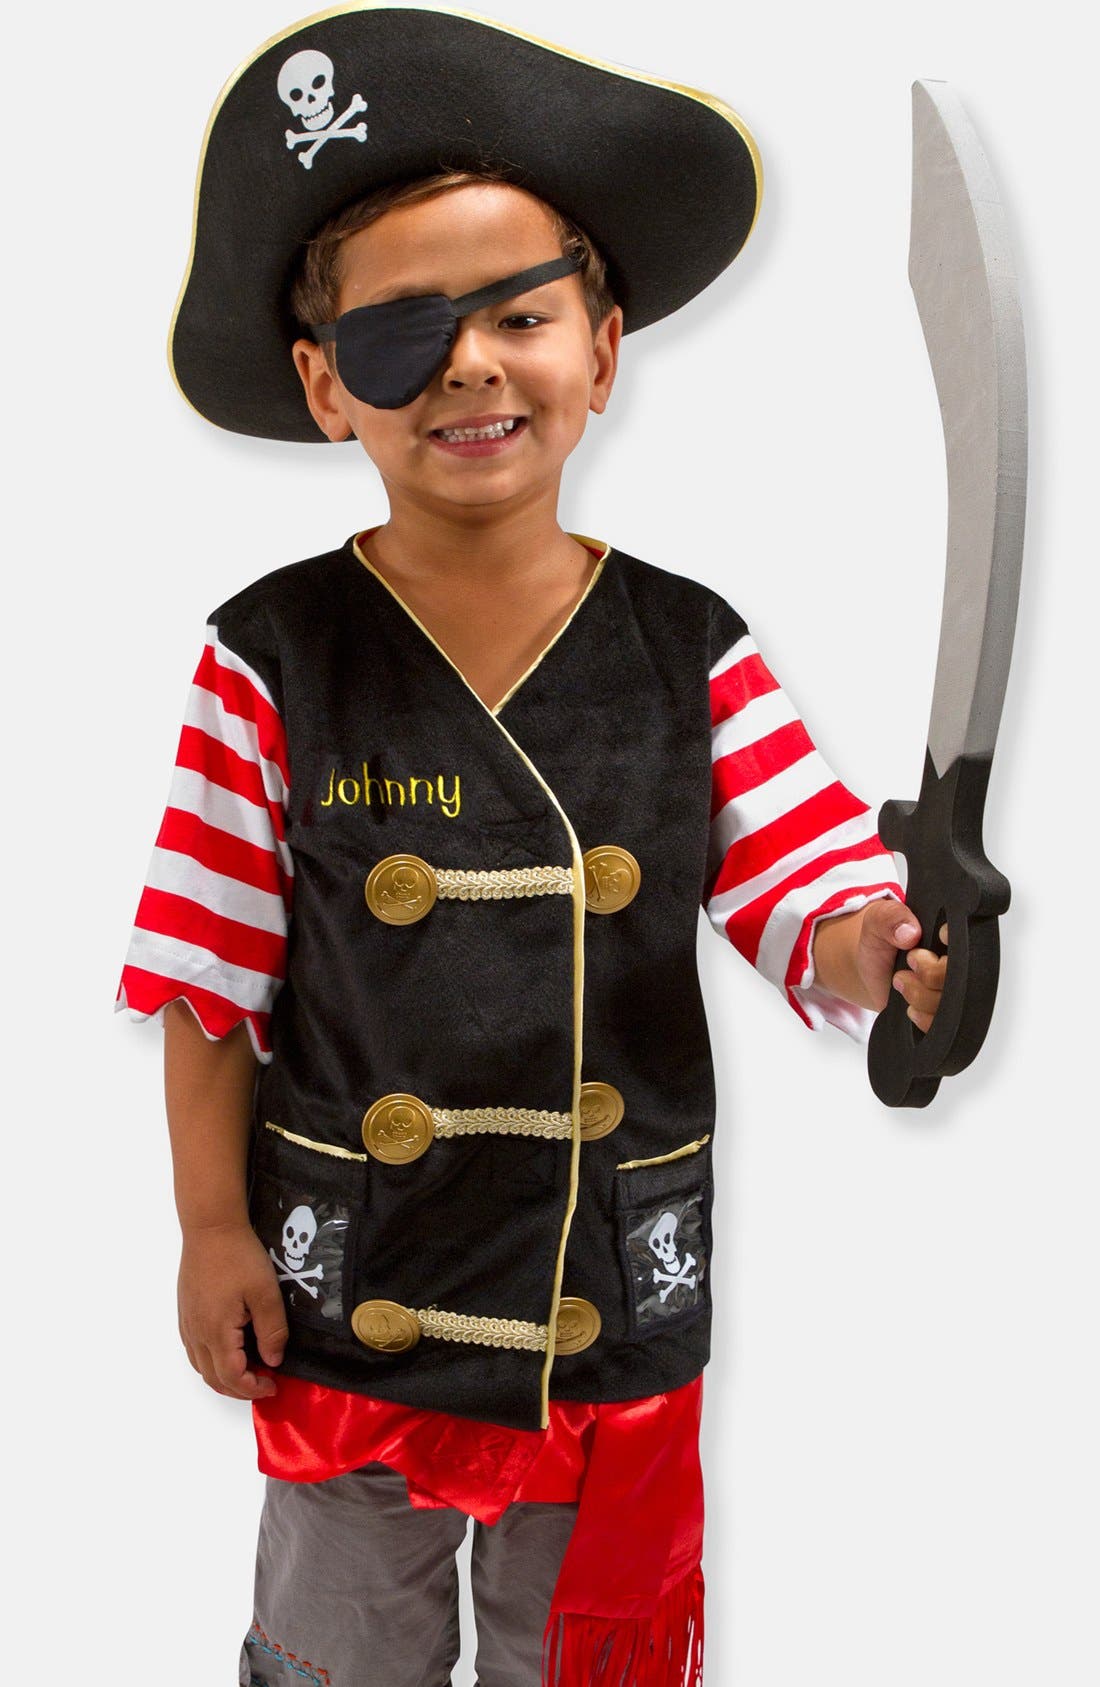 melissa and doug pirate costume